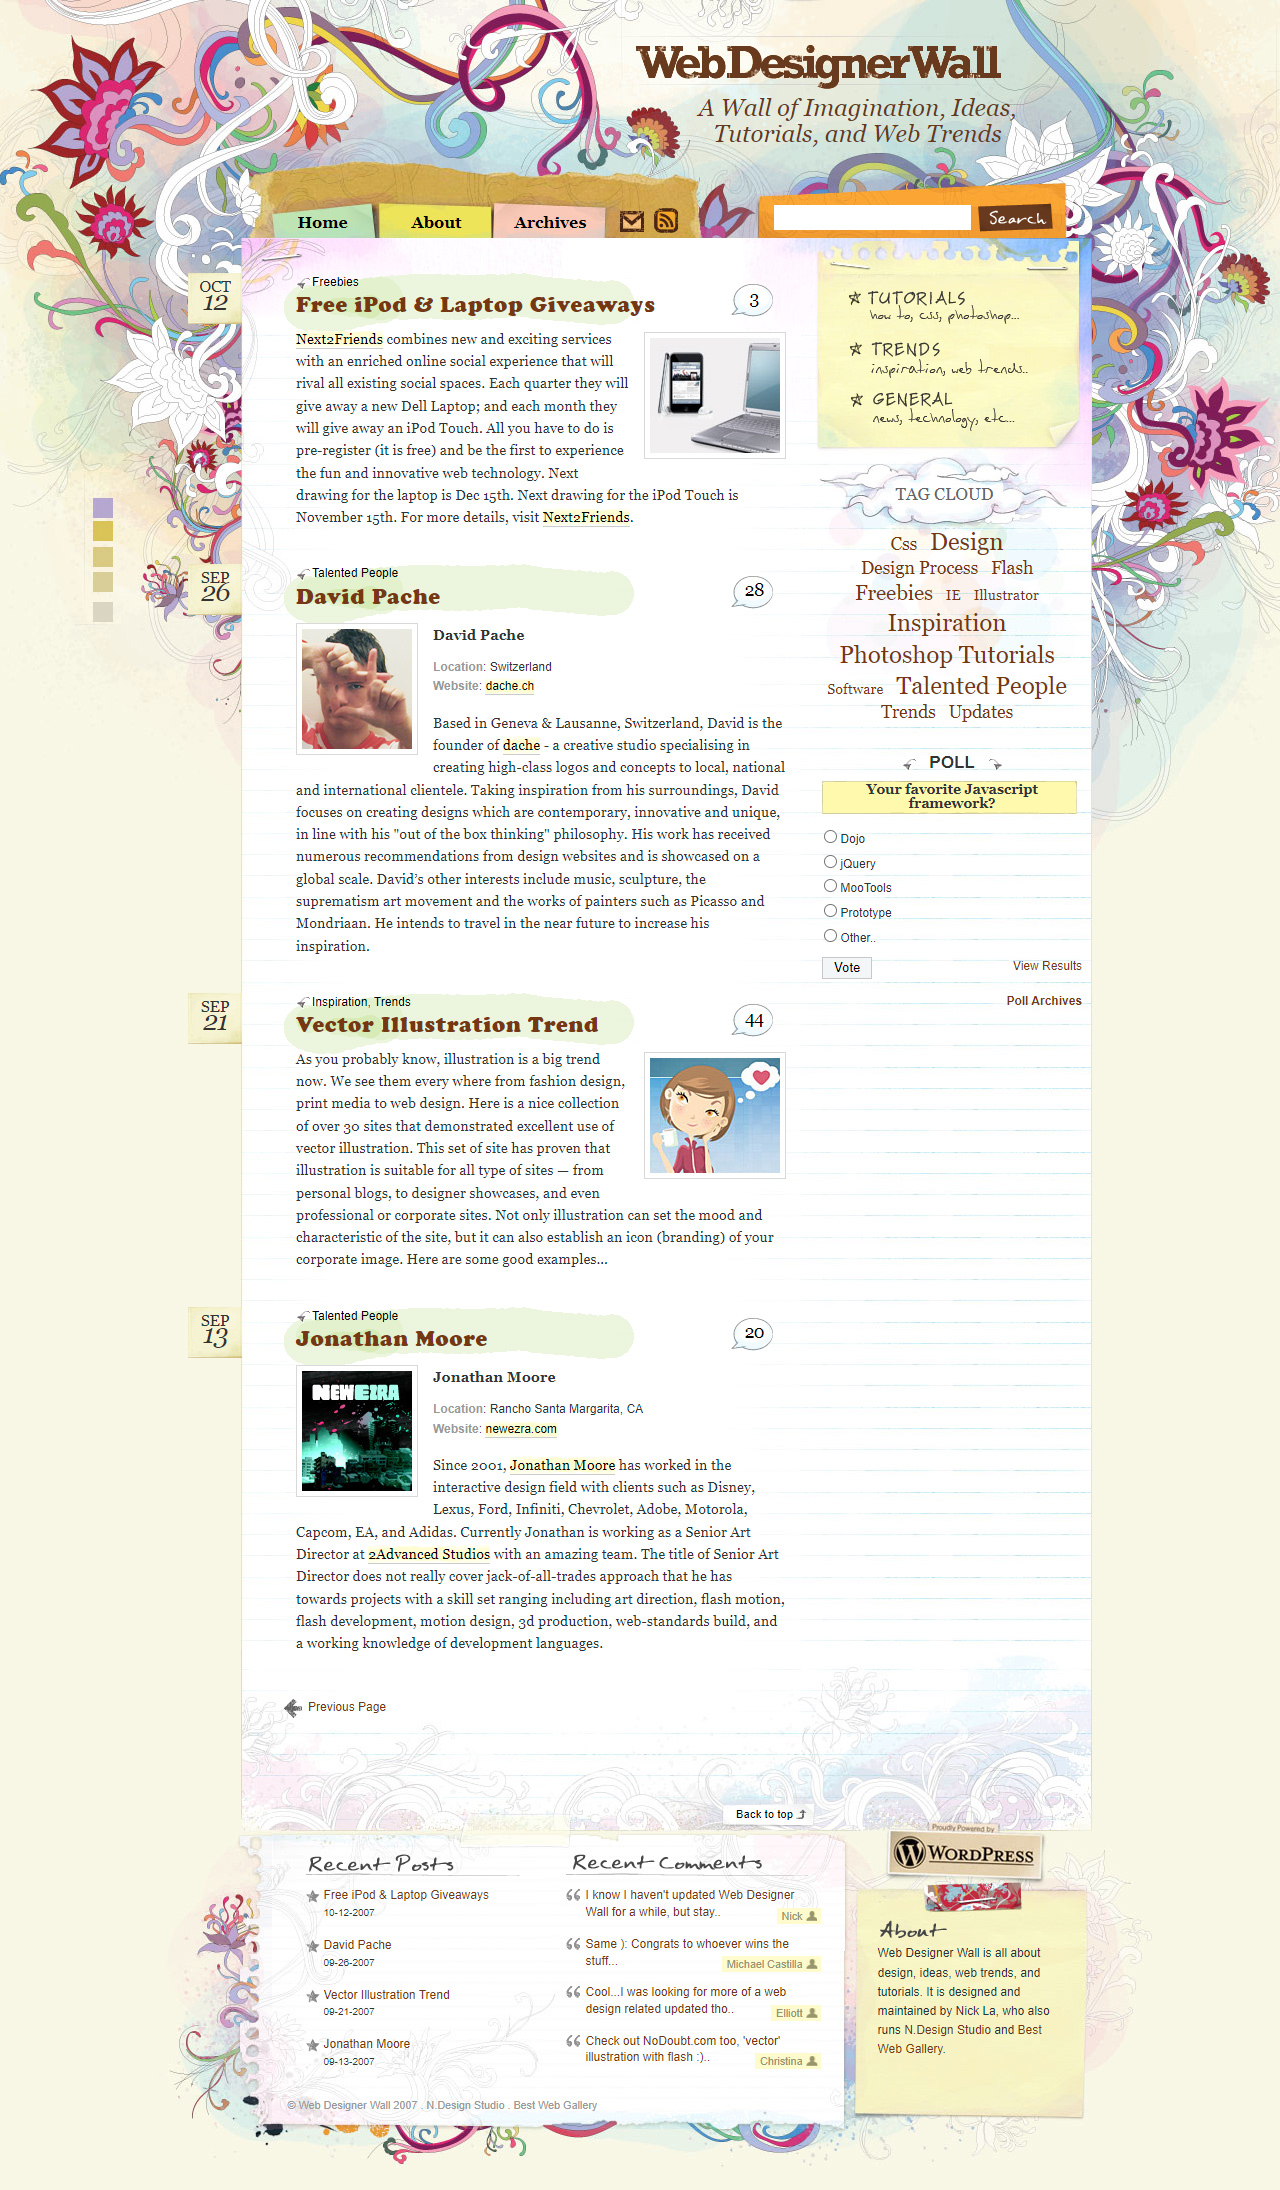 Web Designer Wall website in 2007